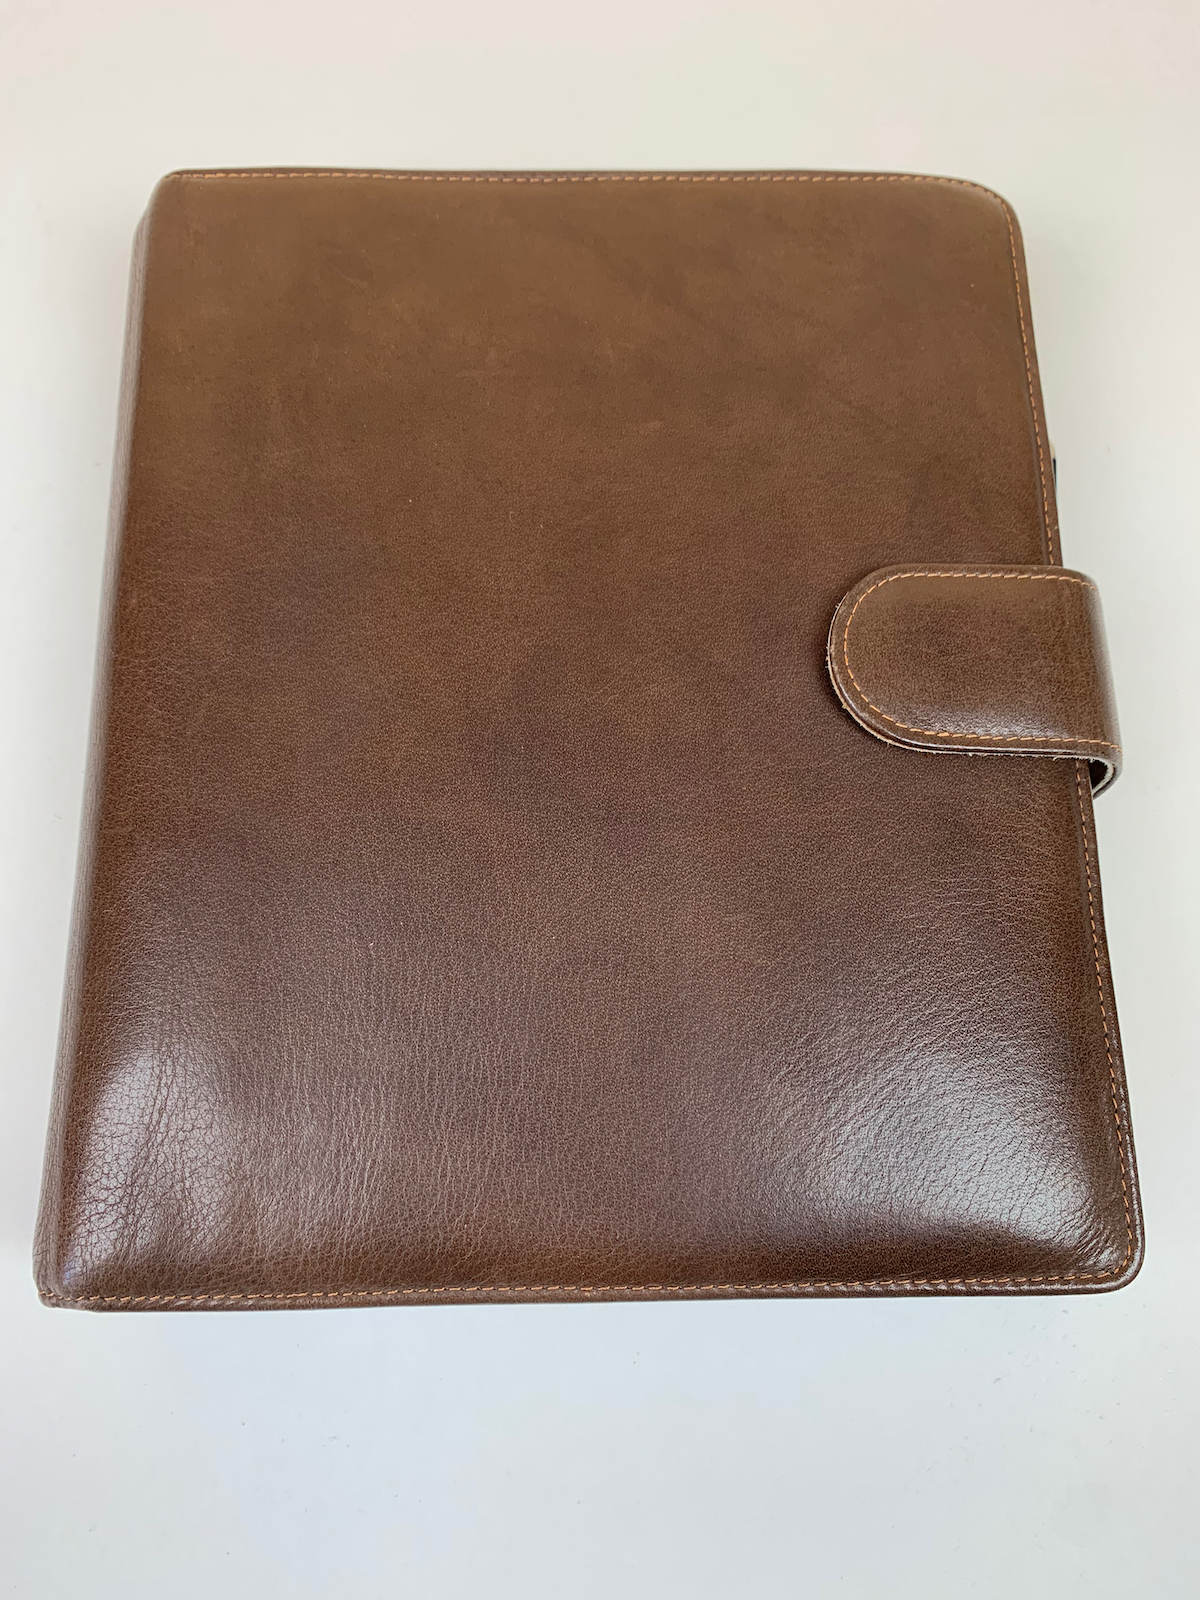 Filofax Nappa Zip Organizer, A6 A5 Size, Nappa Leather, Six Rings,  Week-to-View Calendar Diary, Sleek and Functional Organizer